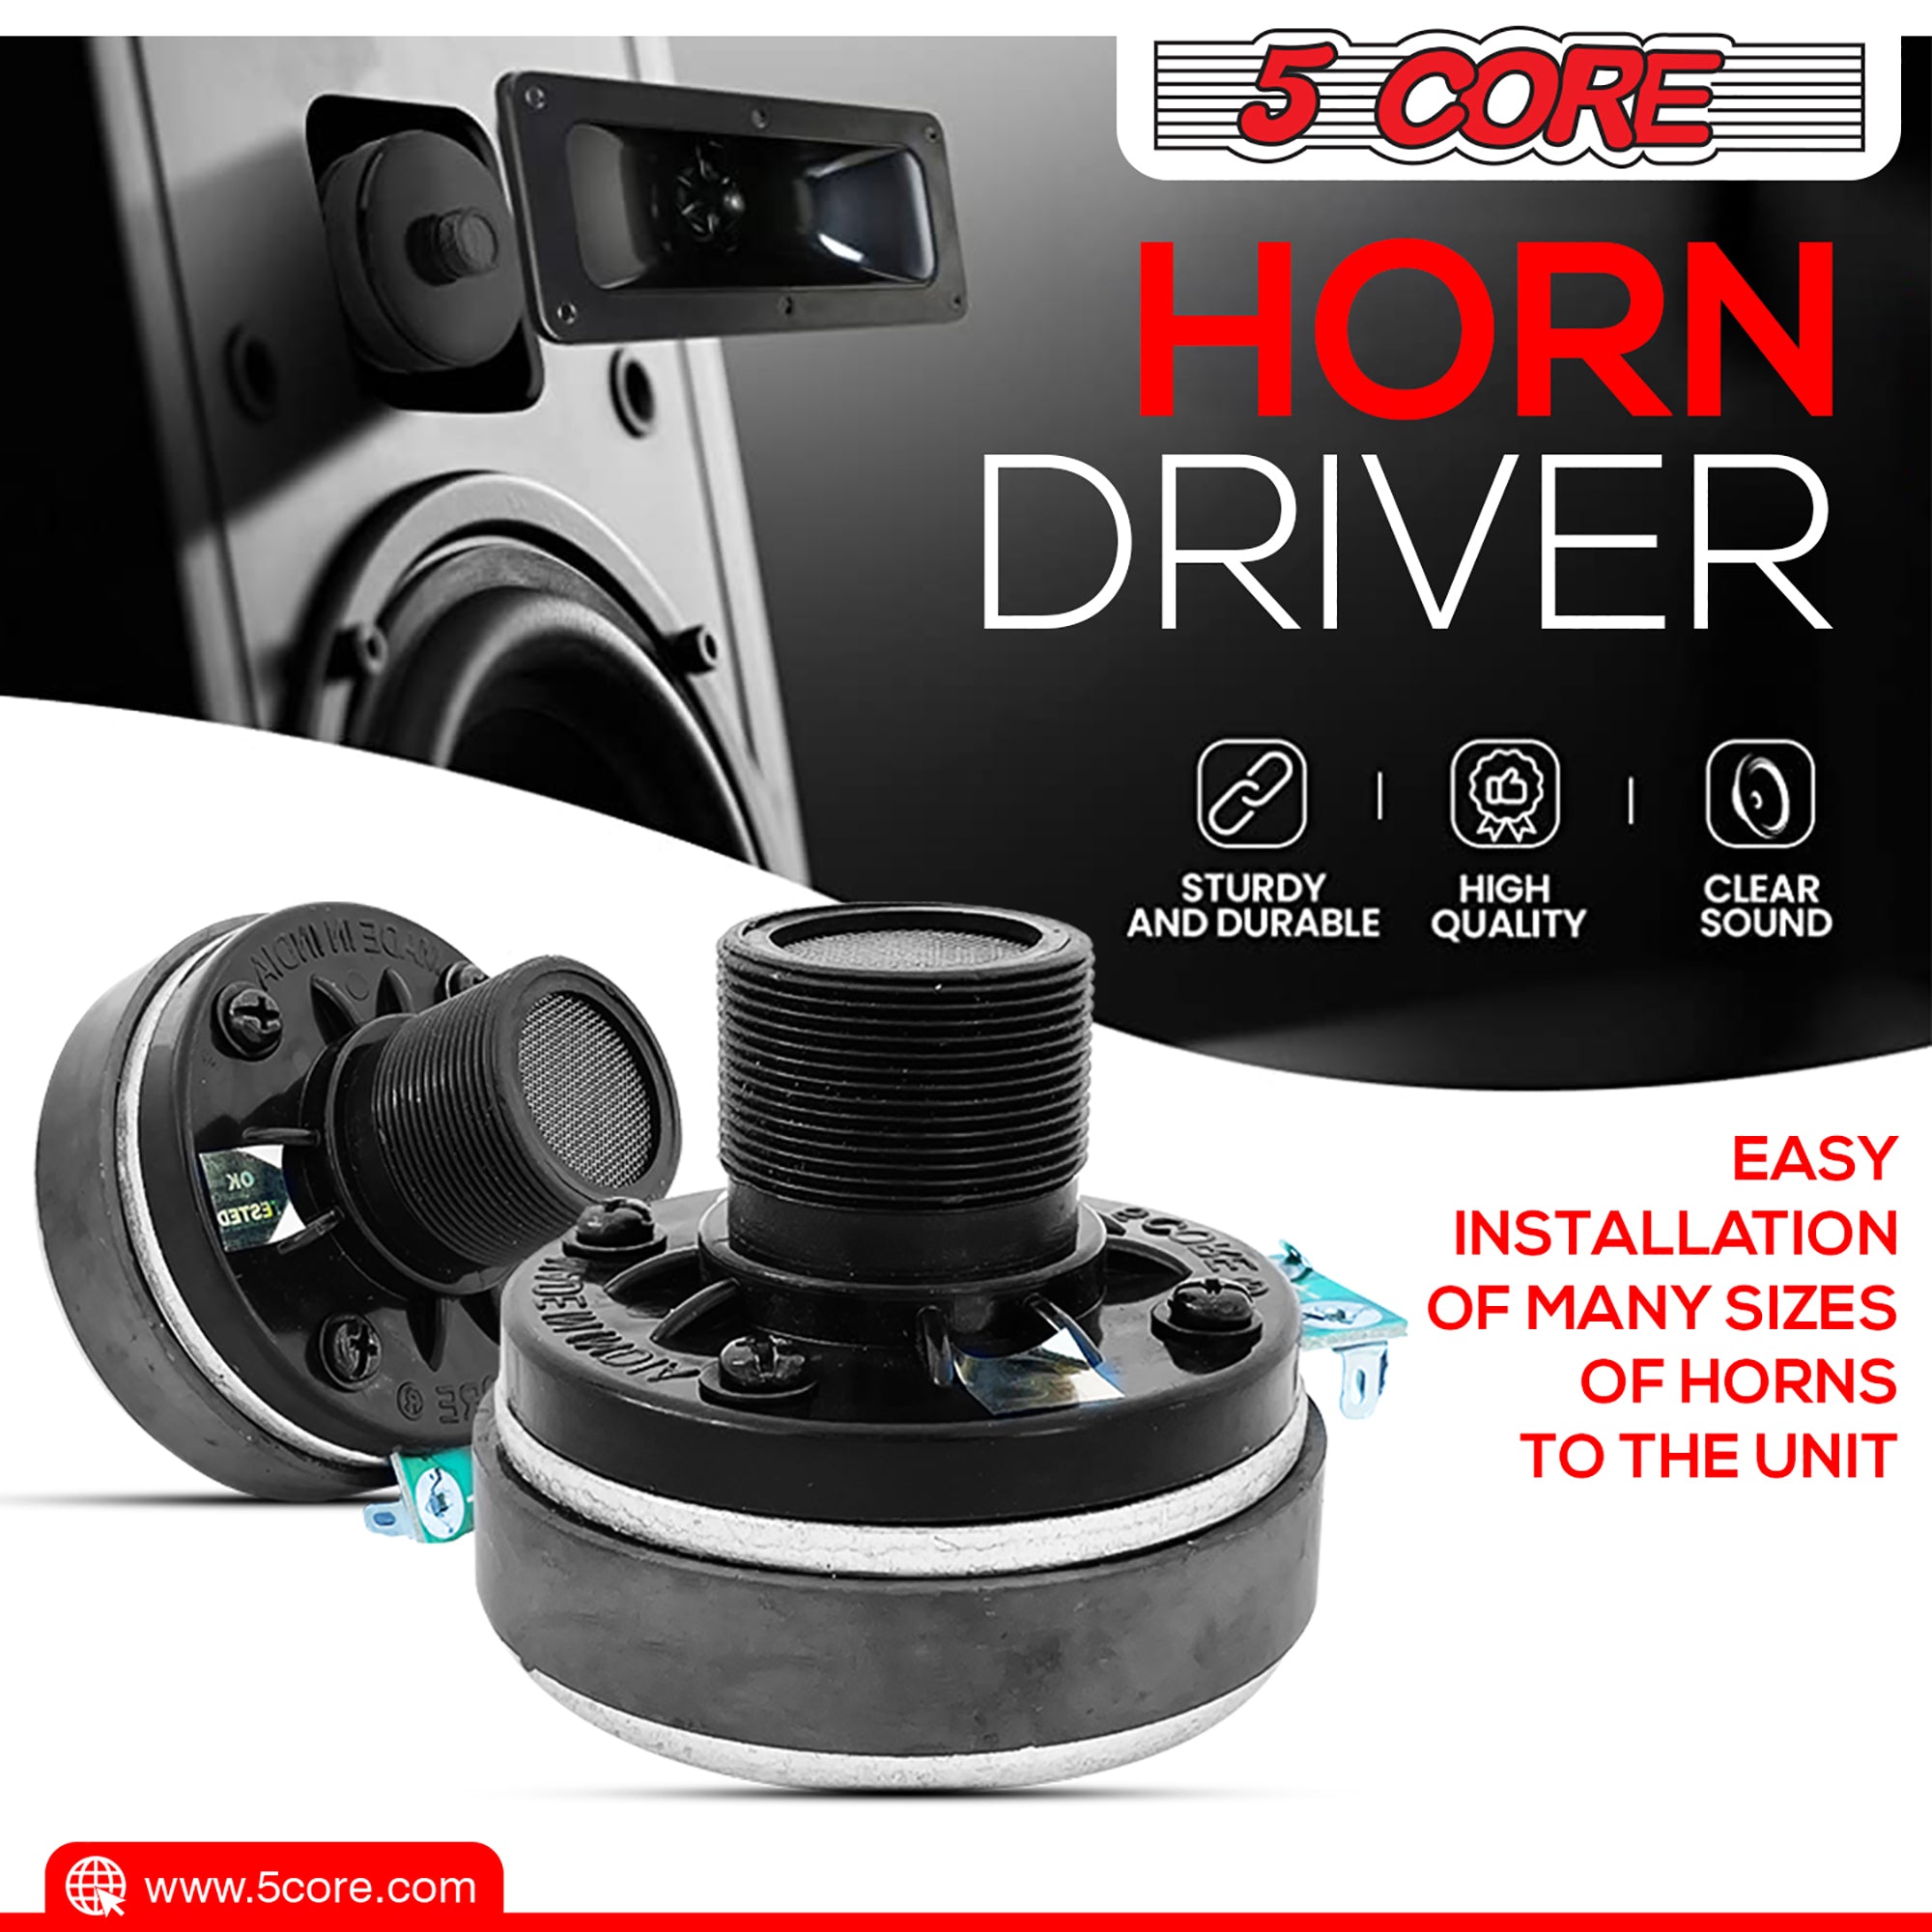 5 Core Horn Speaker Throat Screw On Tweeter Driver Horn 15x5 Inch Rectangle All Weather Directivity Speaker Horn Throat -HISE 15X5 1PC + 5C-D26